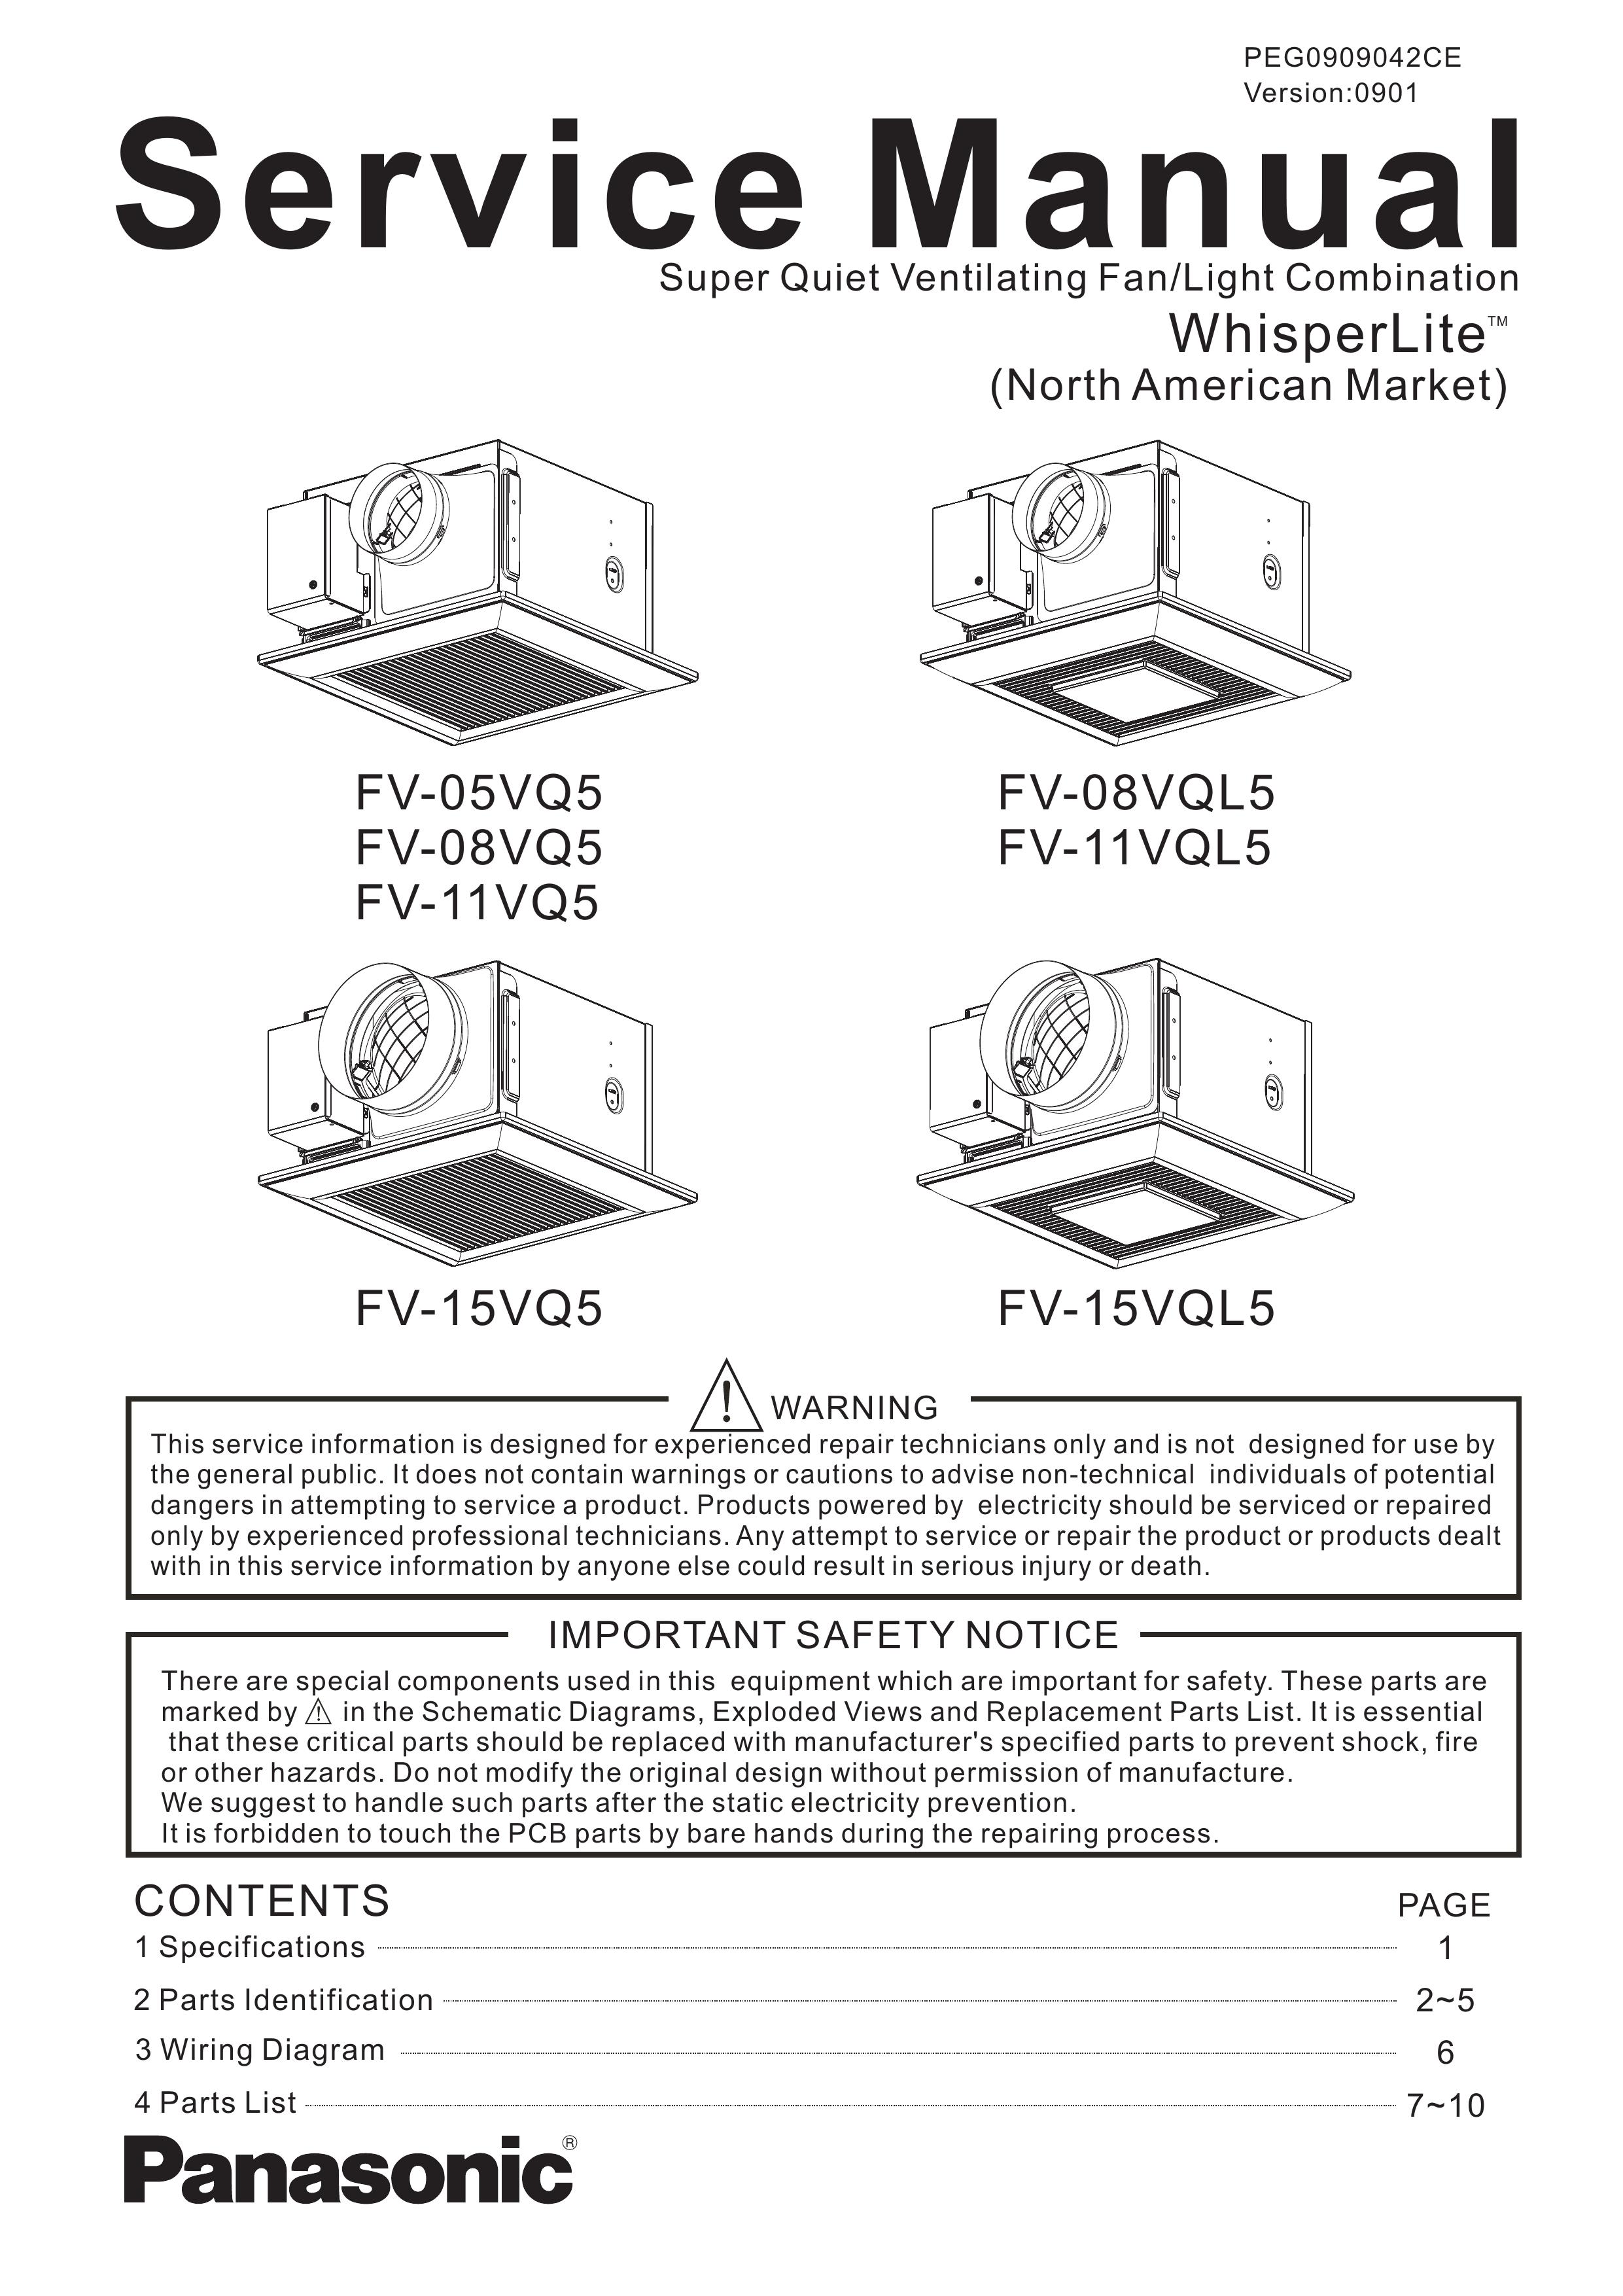 Panasonic FV-11VQL5 Ventilation Hood User Manual